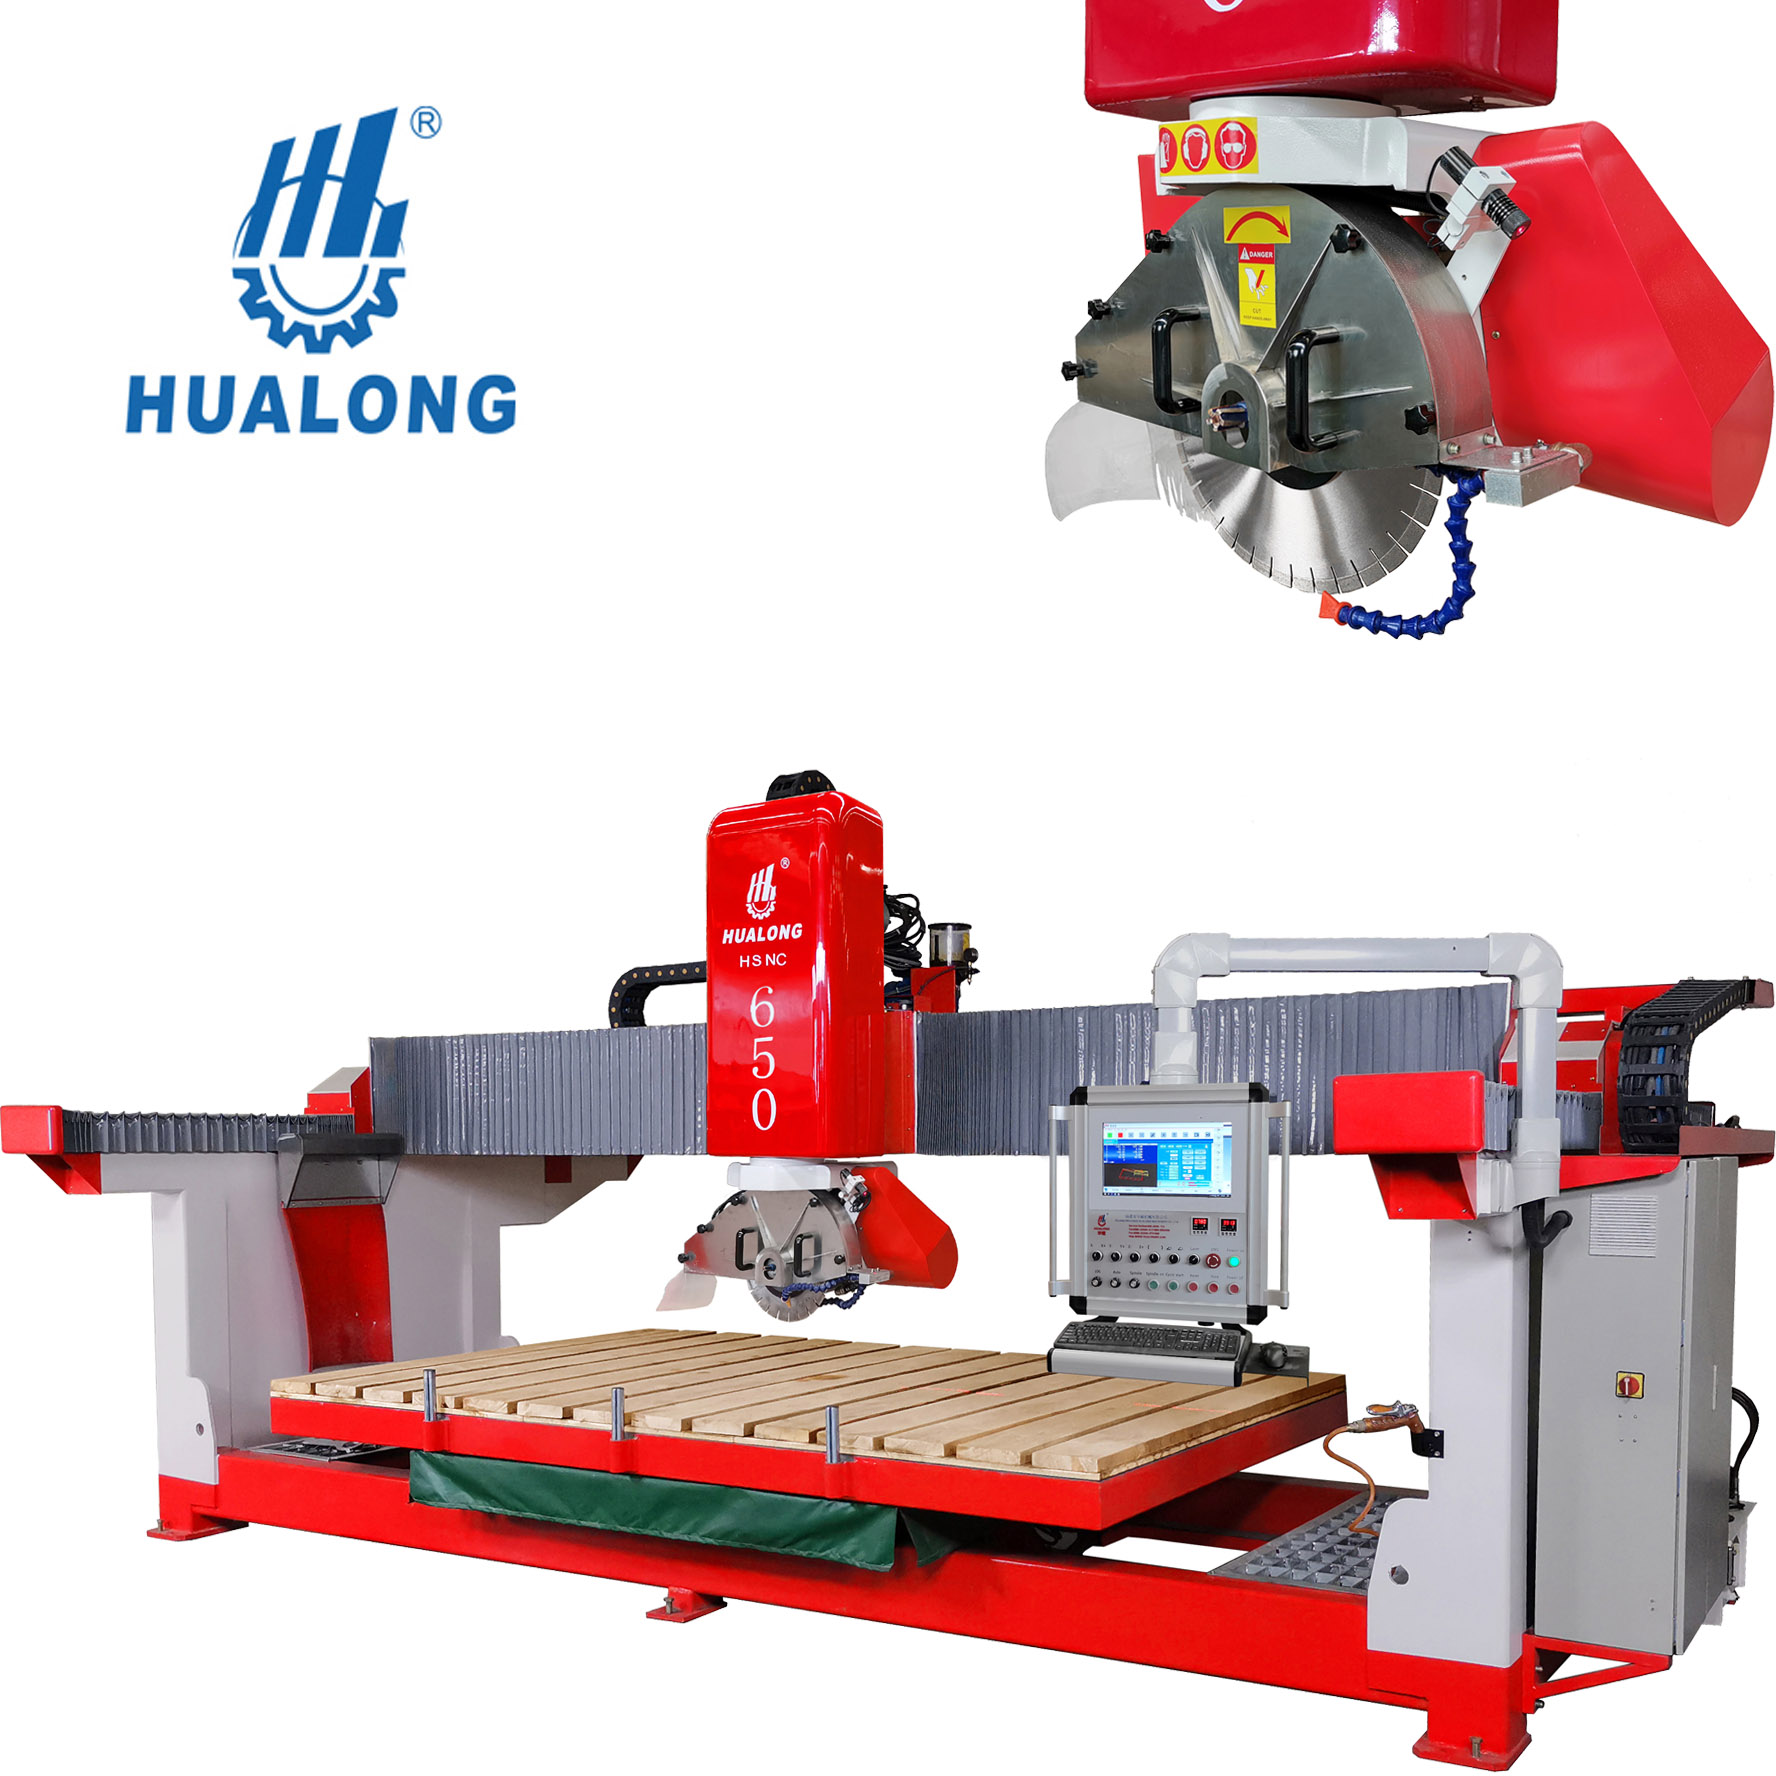 Hualong Stone Cutting Machinery HSNC-650 3 axis CNC Bridge Stone Cutting Machine cheap horizontal milling machine for sale